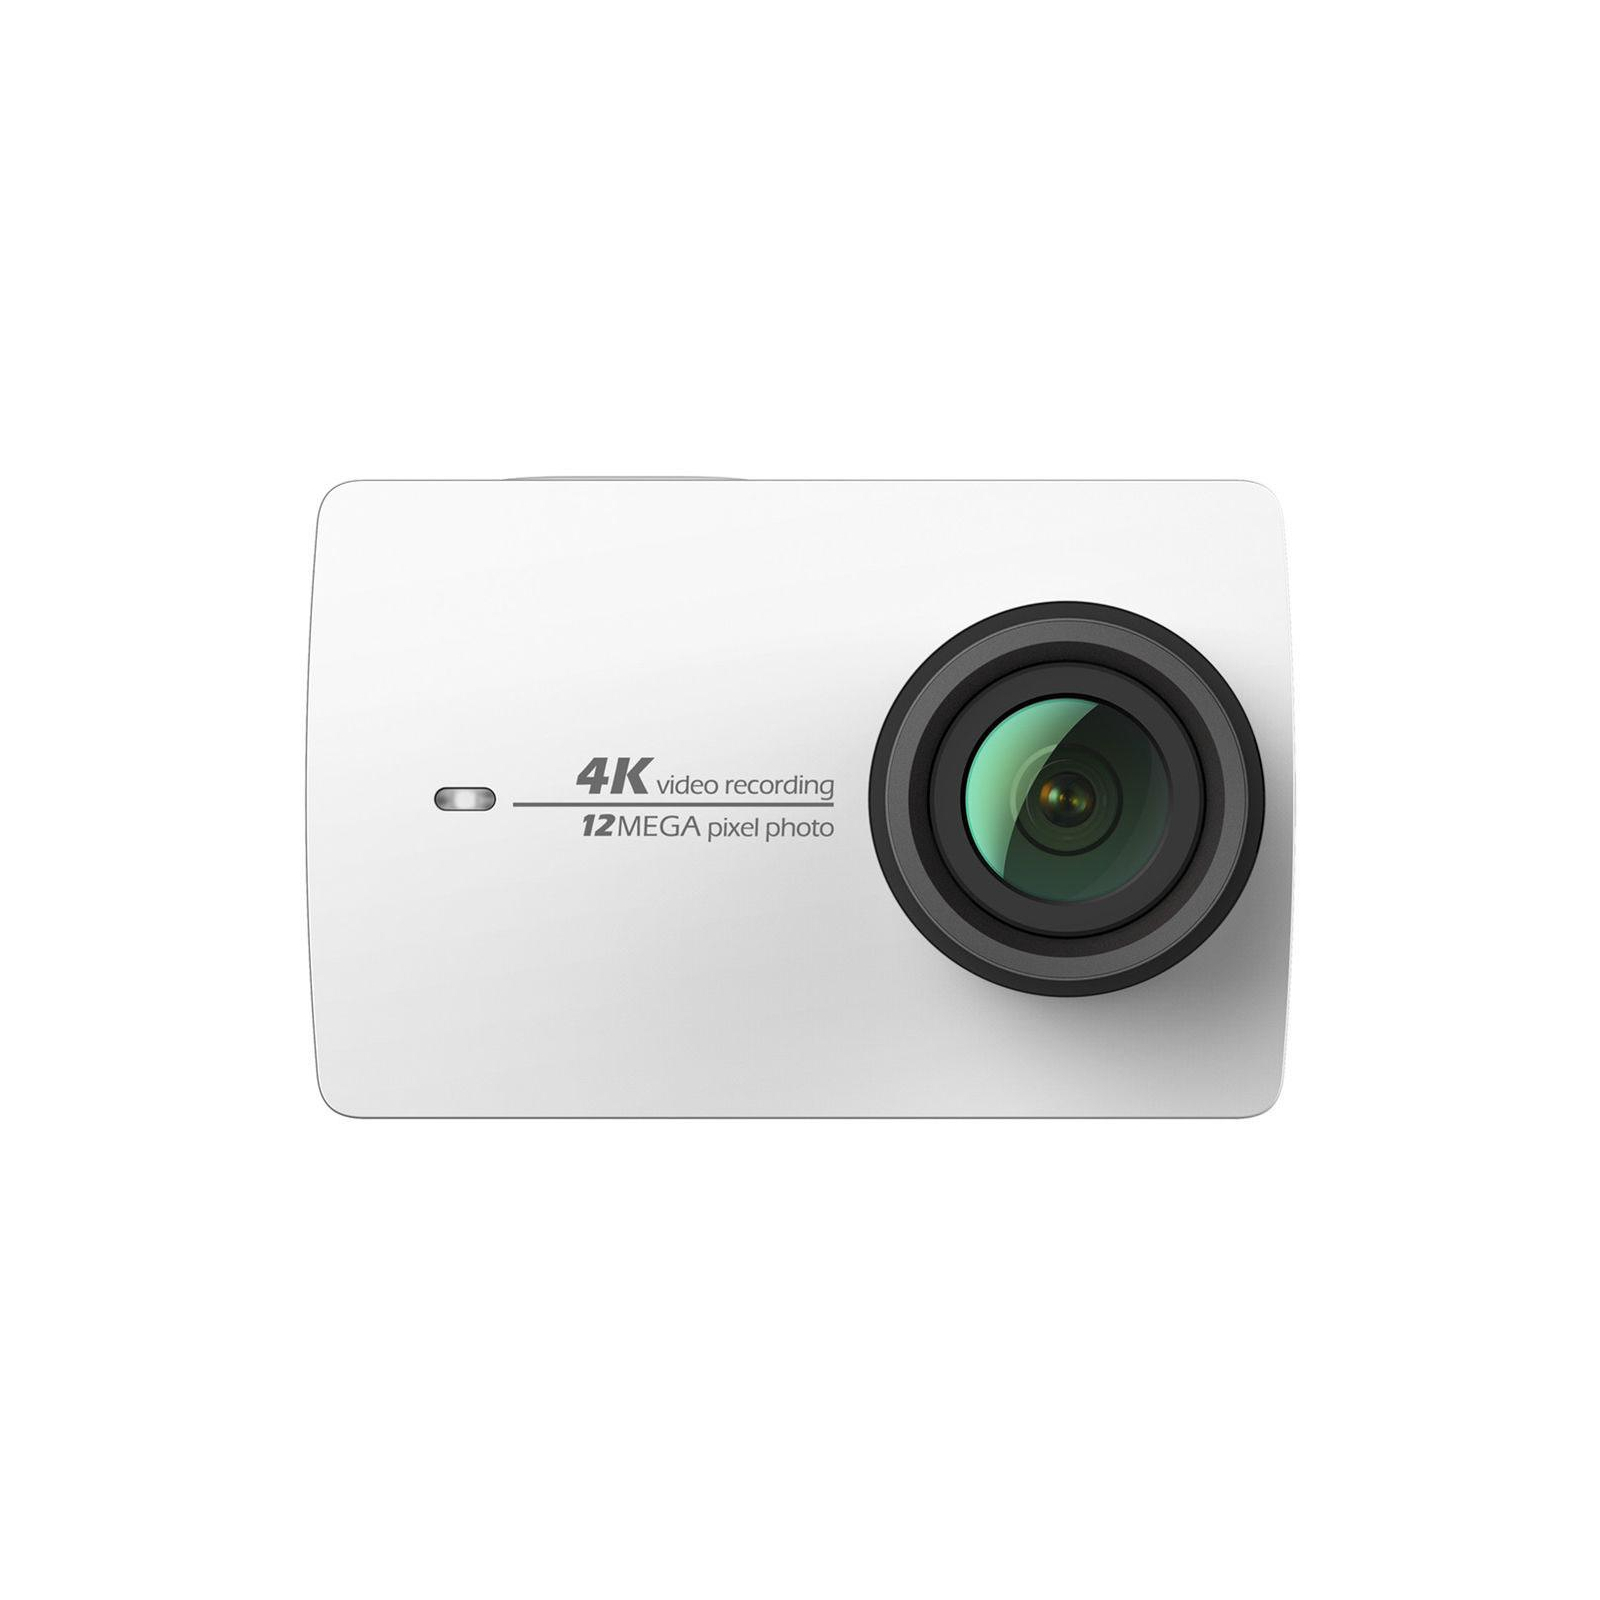 Экшн-камера Xiaomi Yi 4K International Version White (YI-90001)